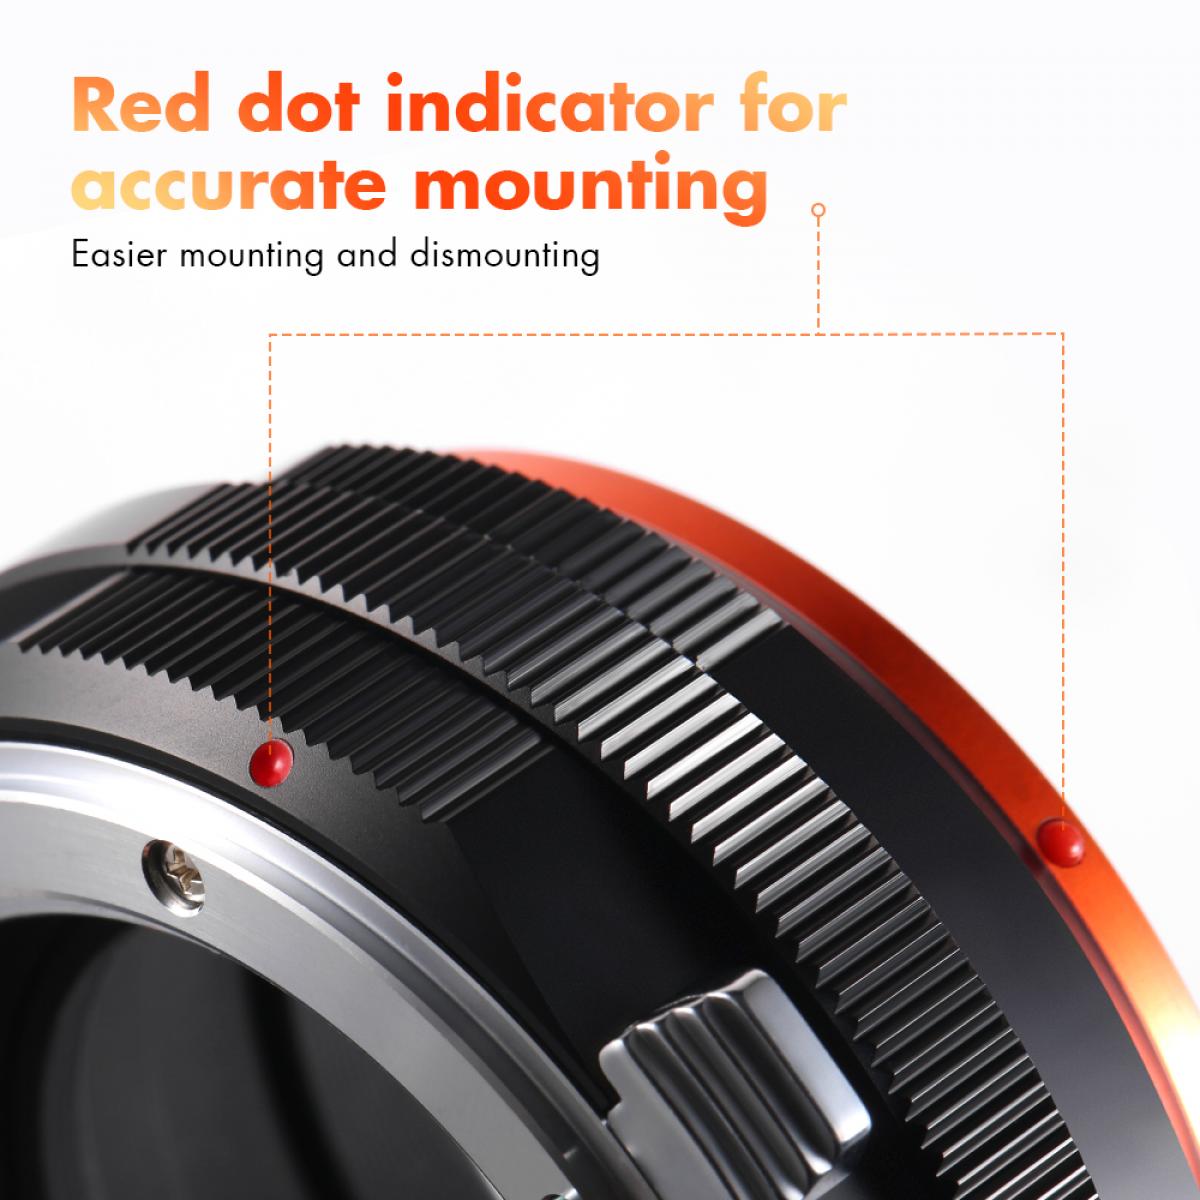 G Mount F/AI/G Lens to E-Mount/NEX Camera Body Mount Adapter with Matting Varnish Design K&F Concept Lens Mount Adapter